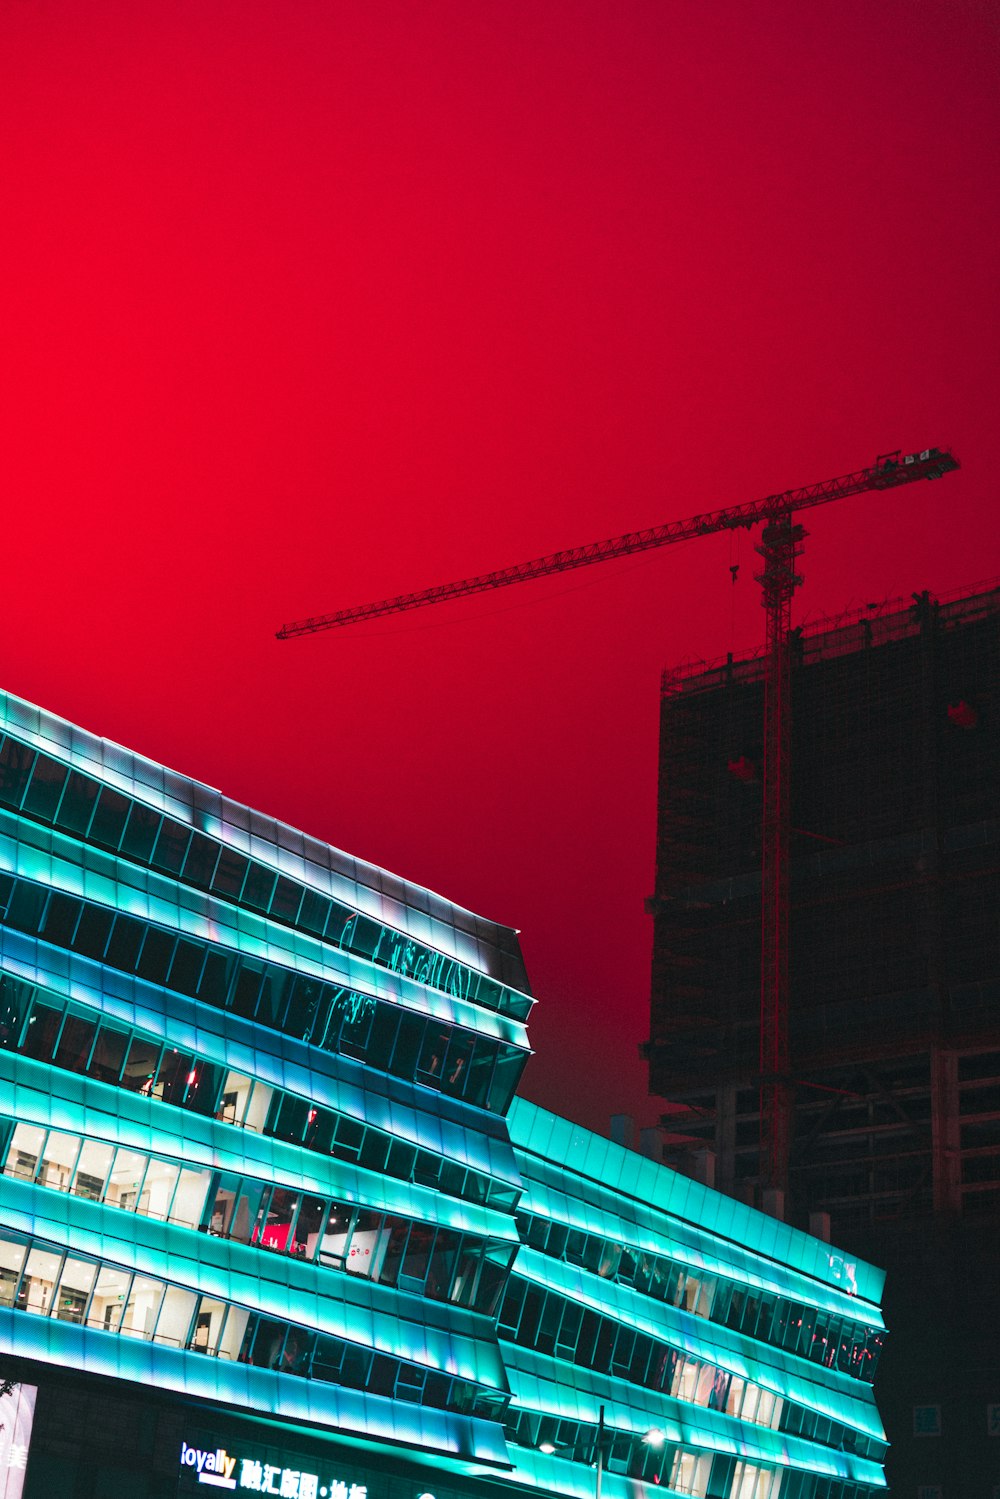 tower crane between buildings under red sky